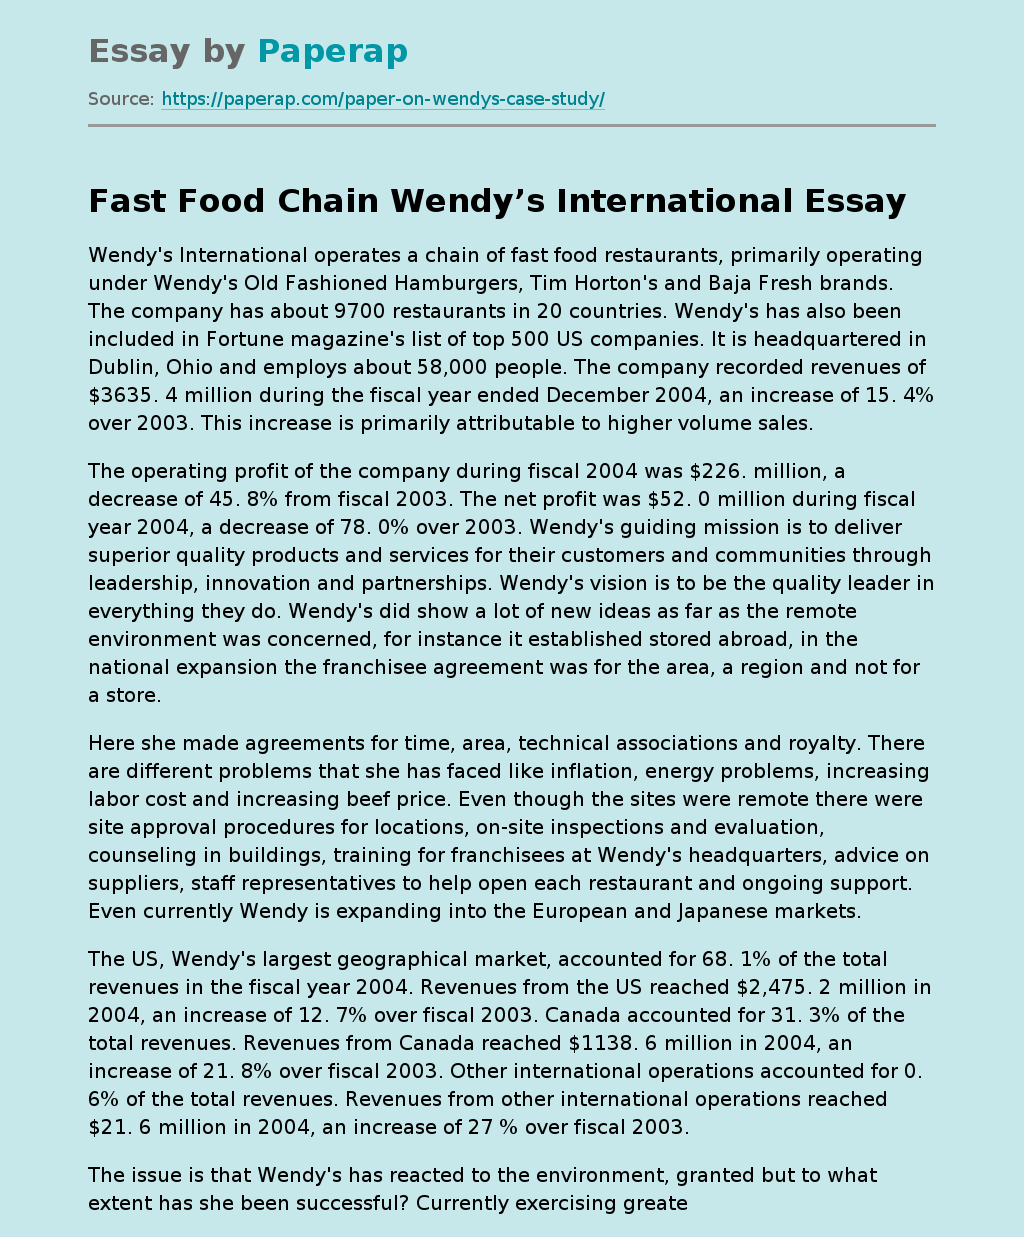 Fast Food Chain Wendy’s International